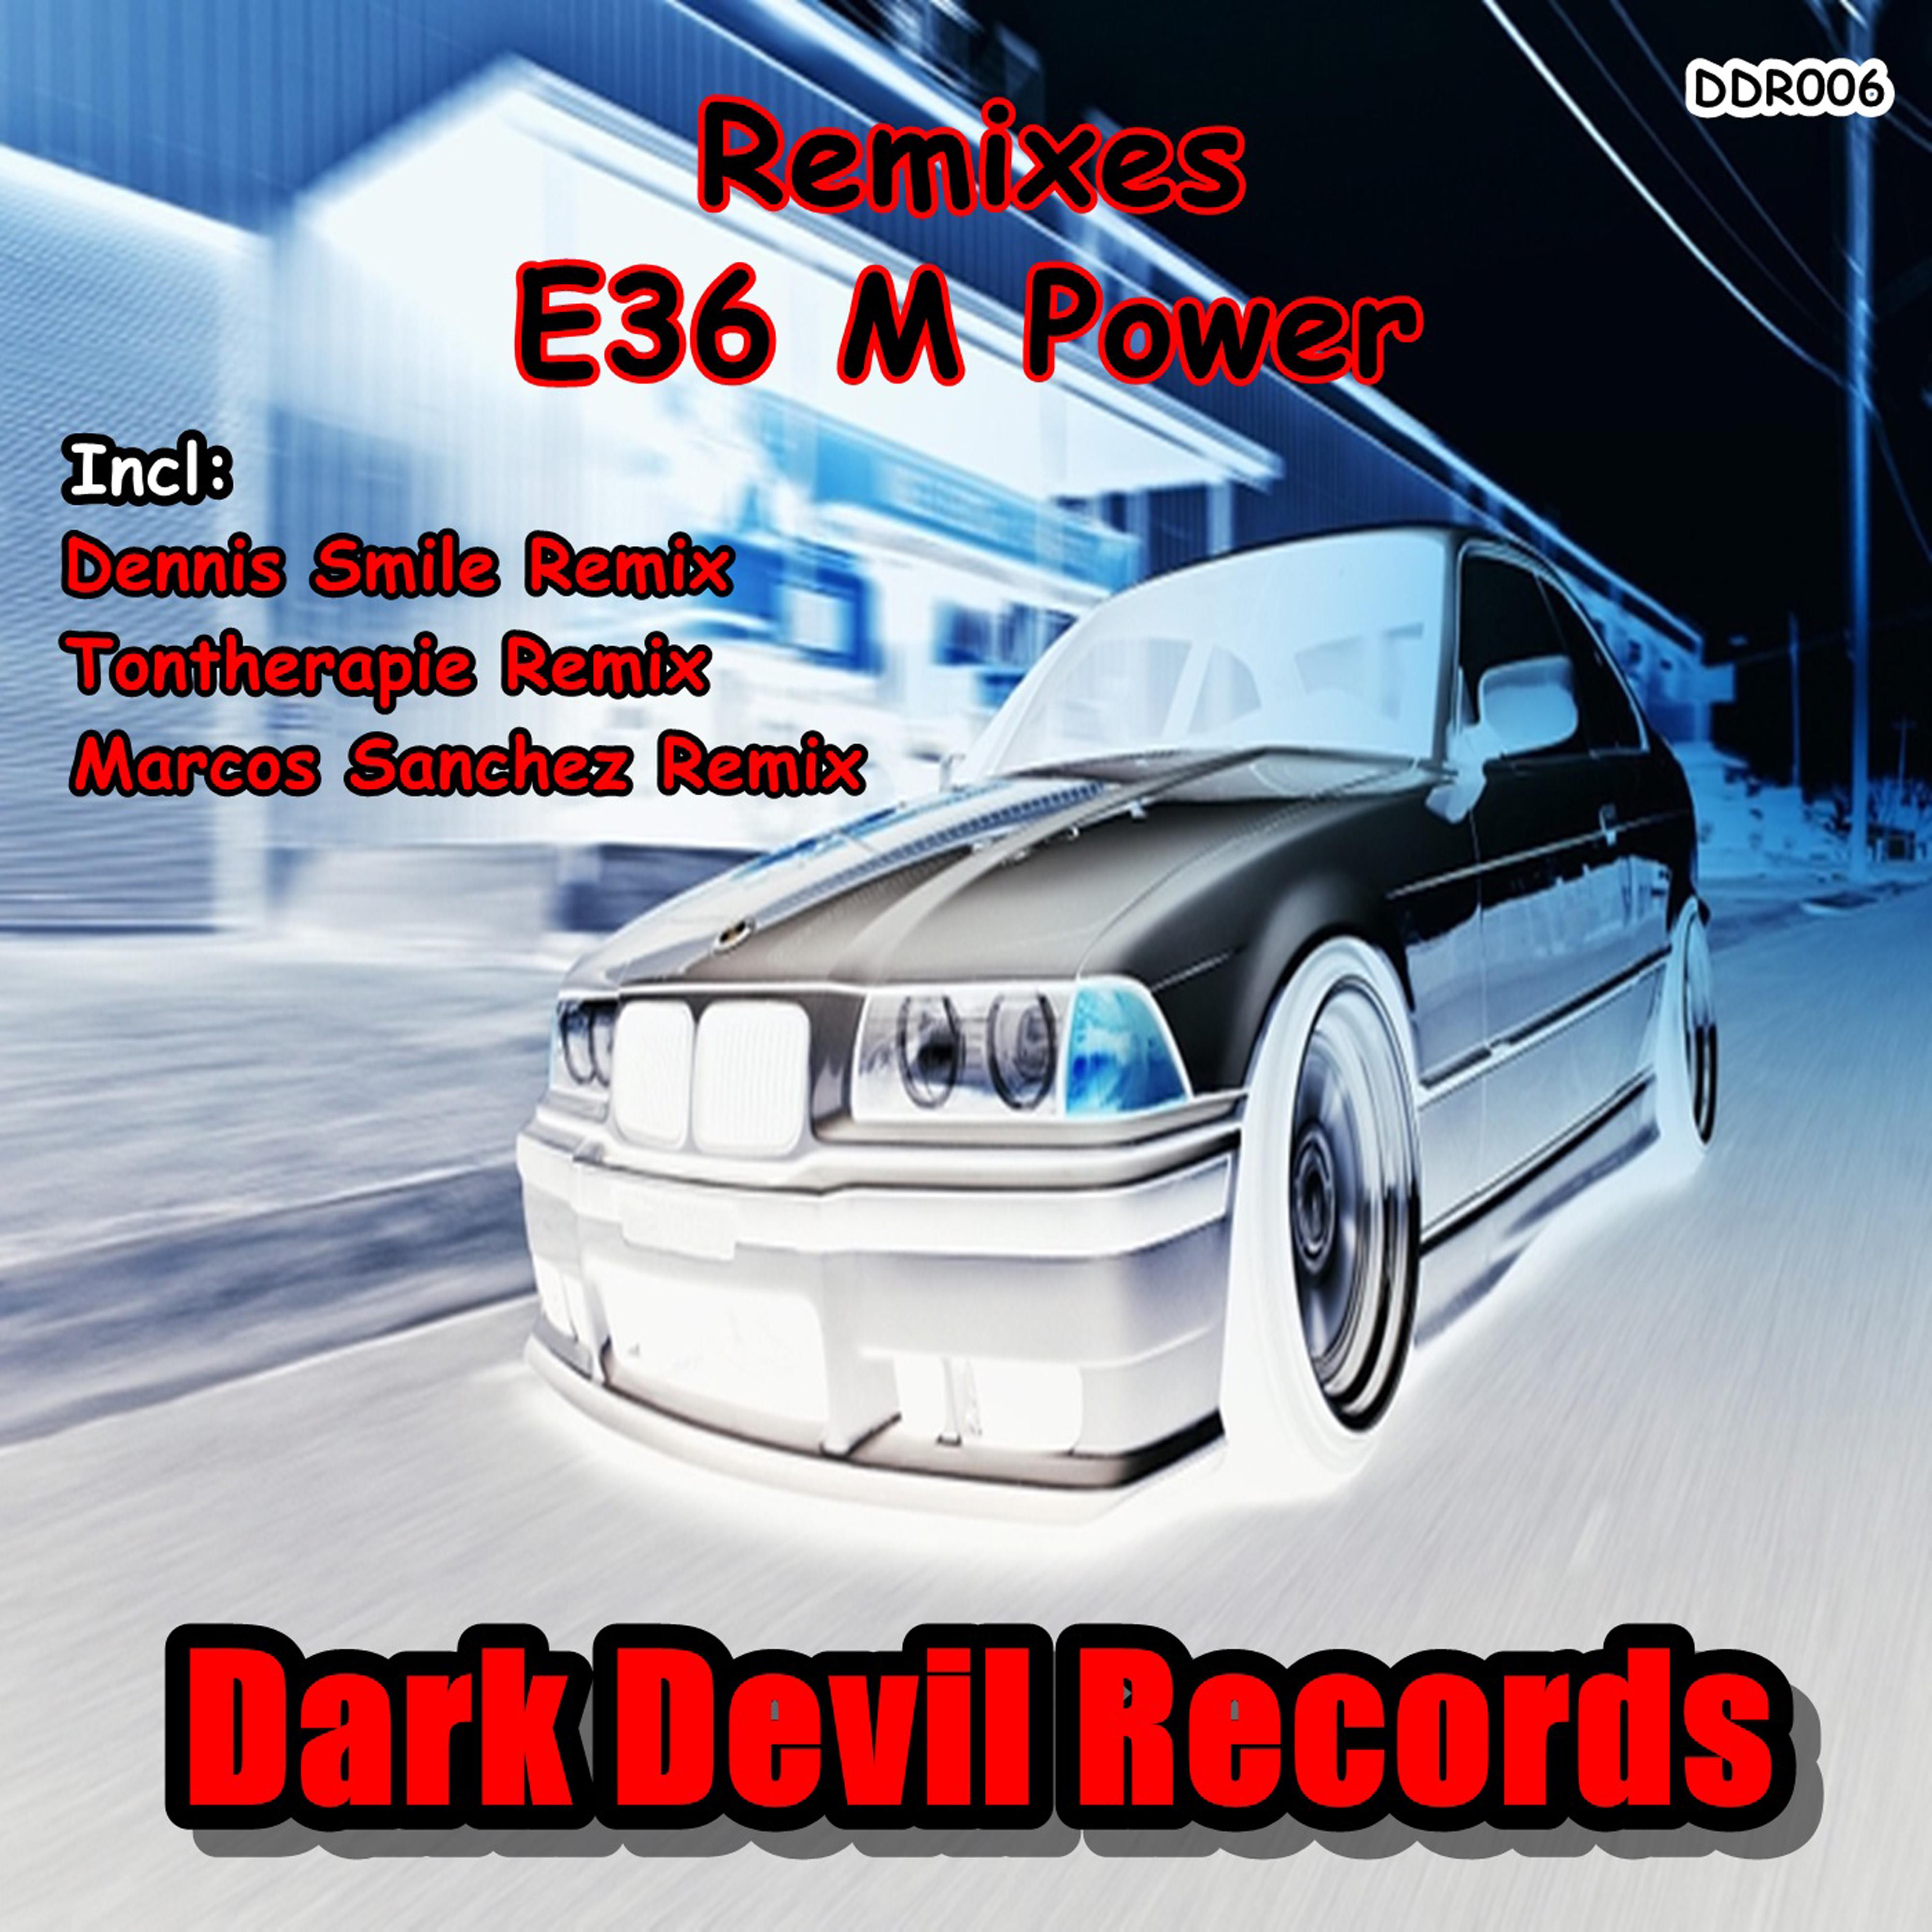 E36 M Power (Tontherapie Remix)